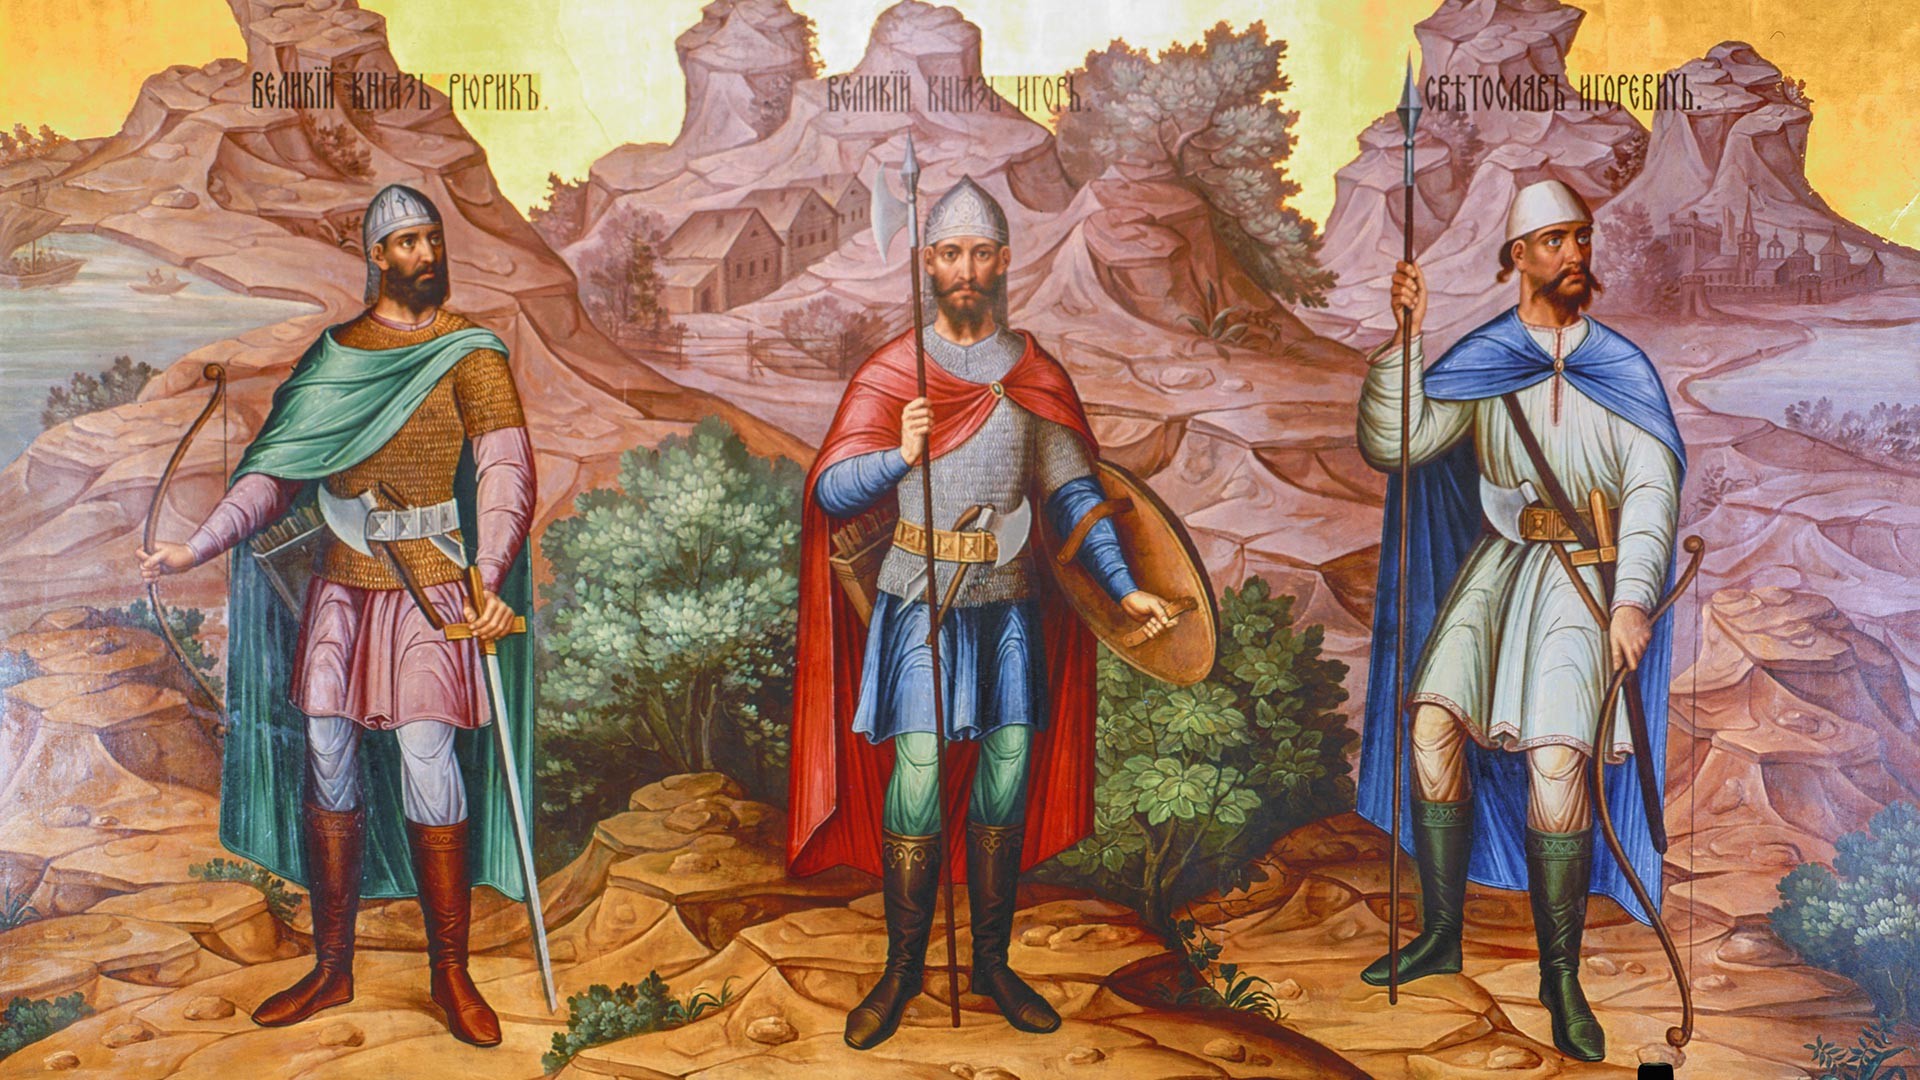 Les princes Riourik, Igor et Igor Sviatoslavitch. Reproduction d'une peinture murale